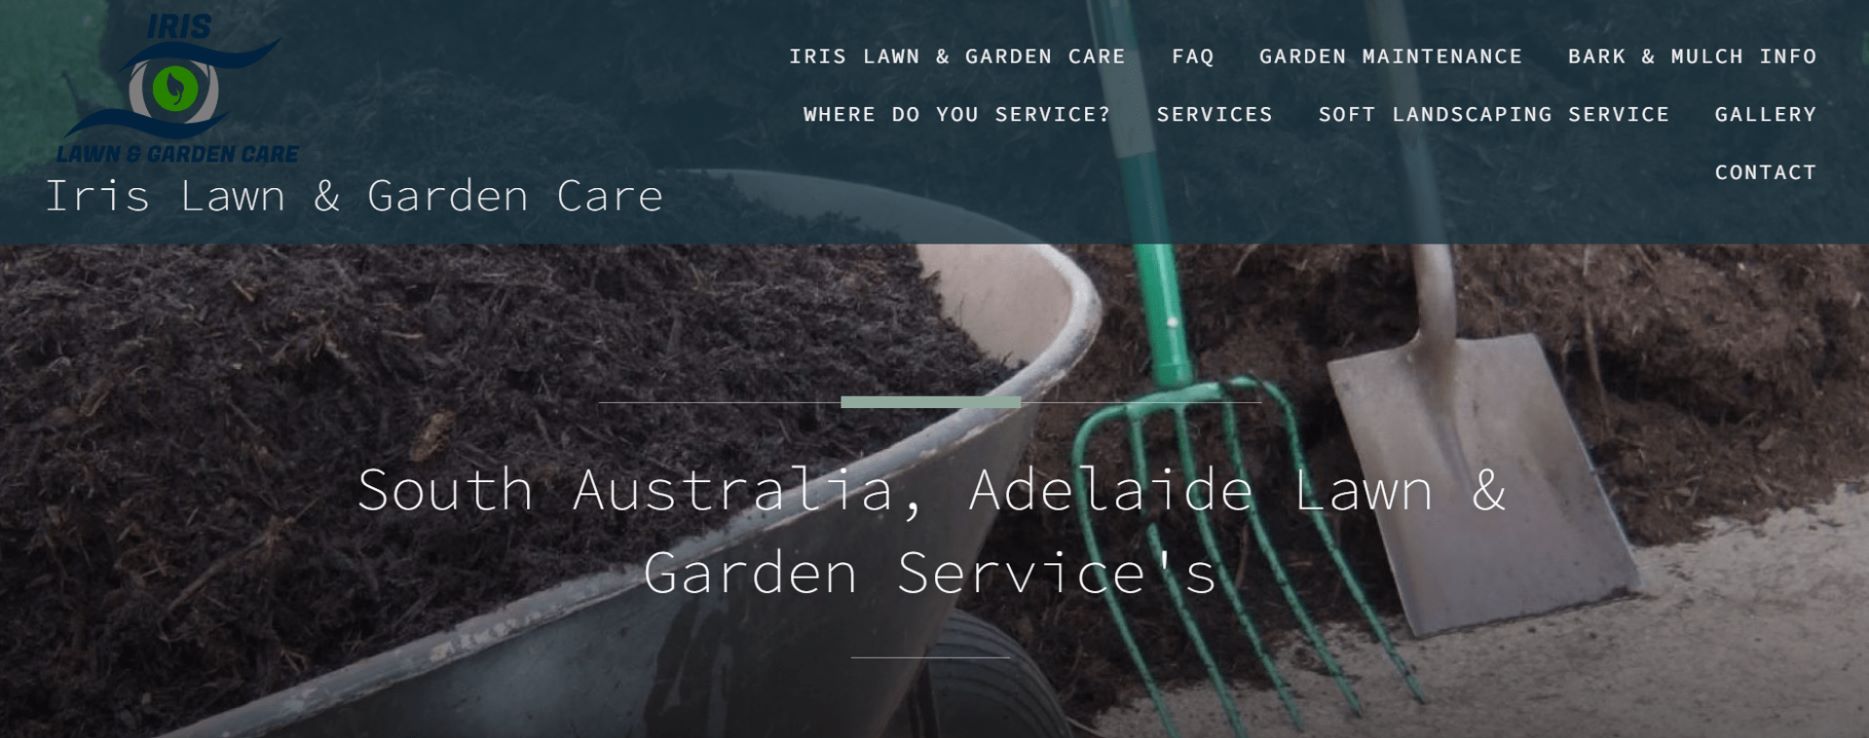 iris lawn and garden care